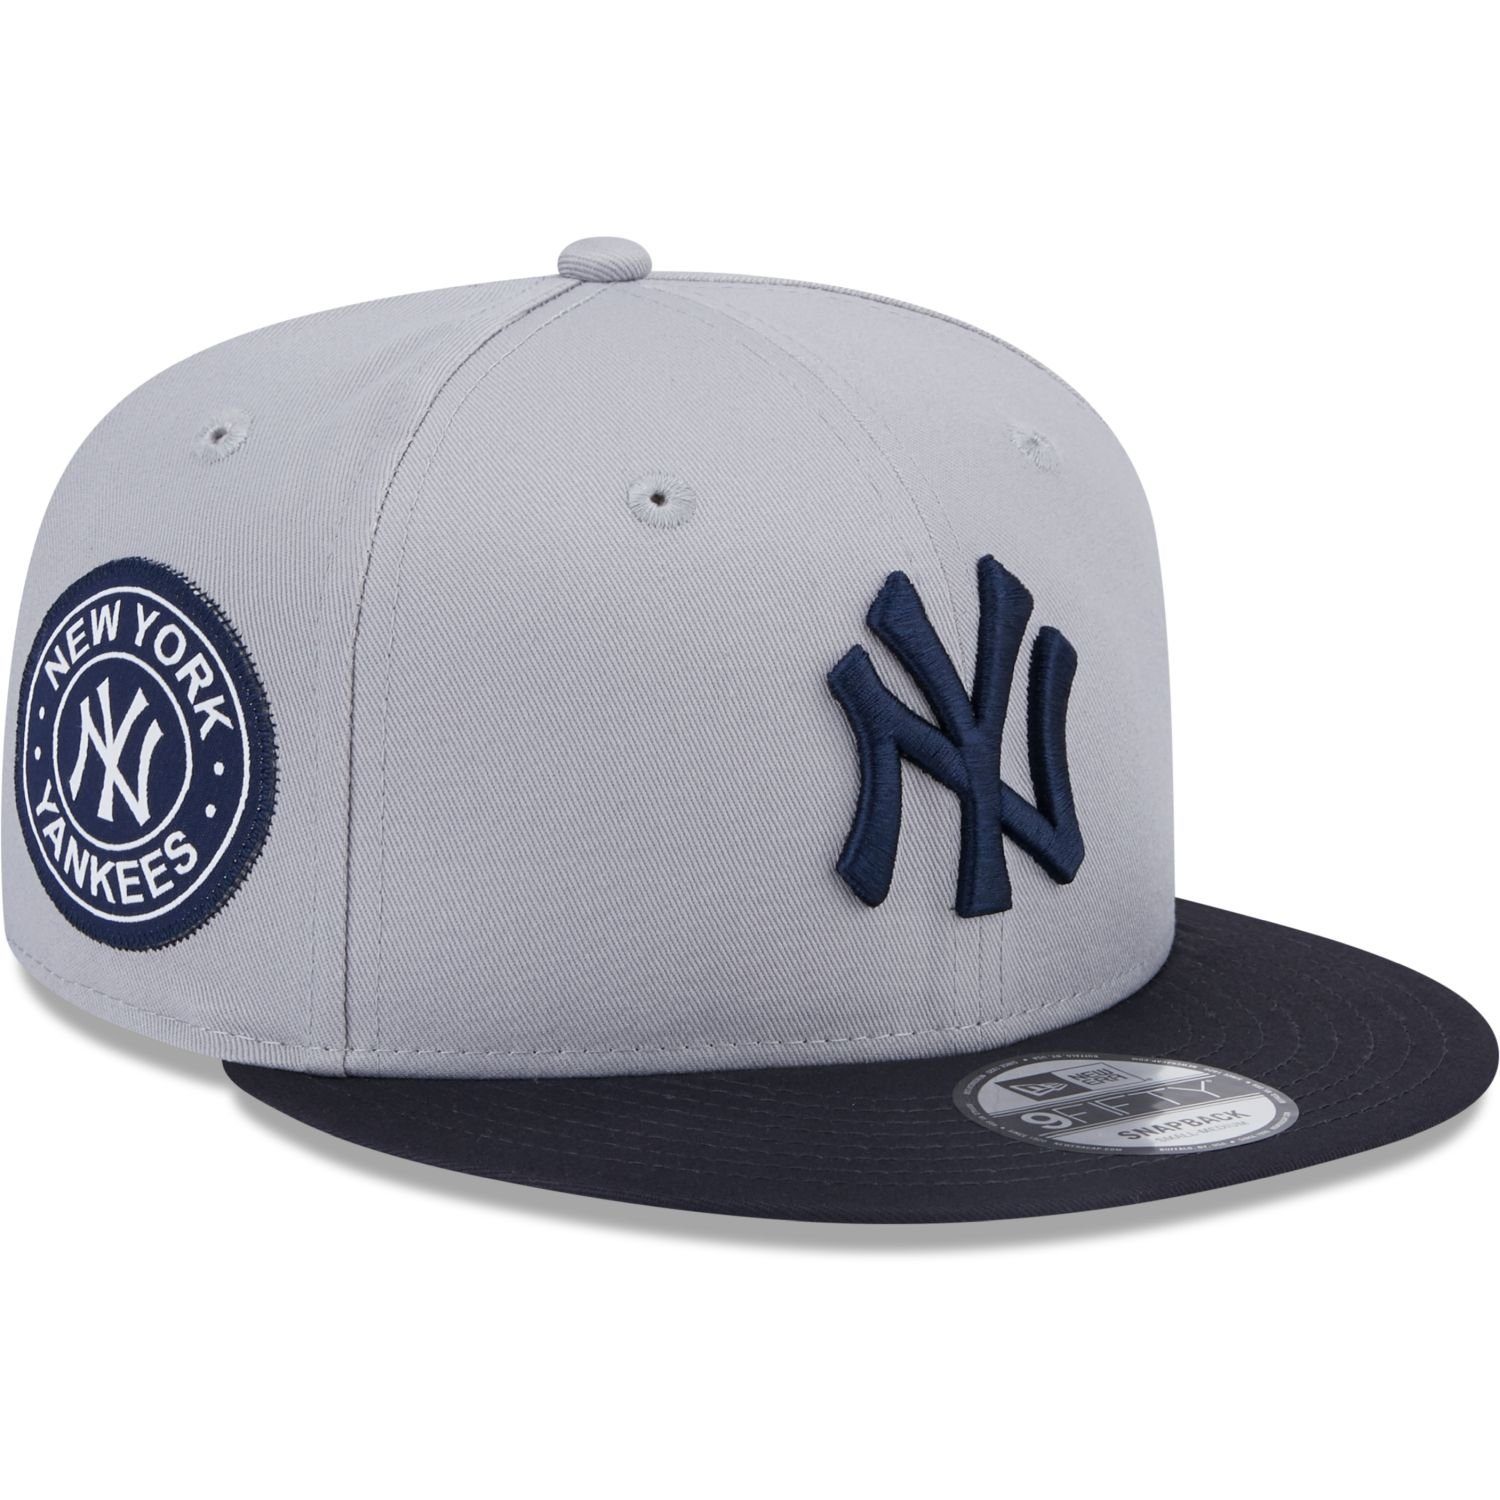 Era New 9Fifty York Yankees New Cap Snapback SIDEPATCH